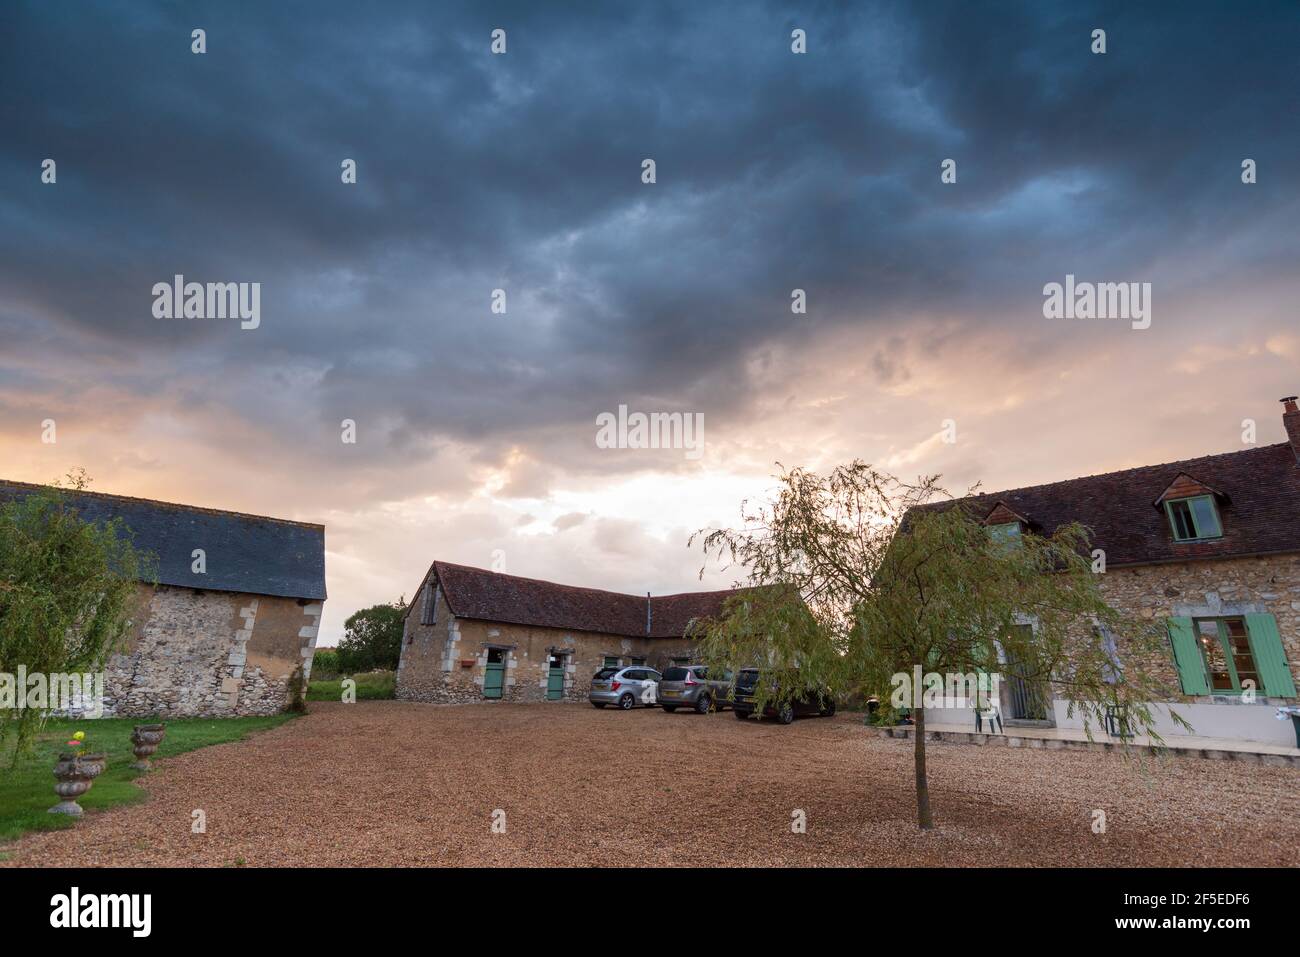 Tempesta nuvole al tramonto su una rustica casa colonica francese. Foto Stock